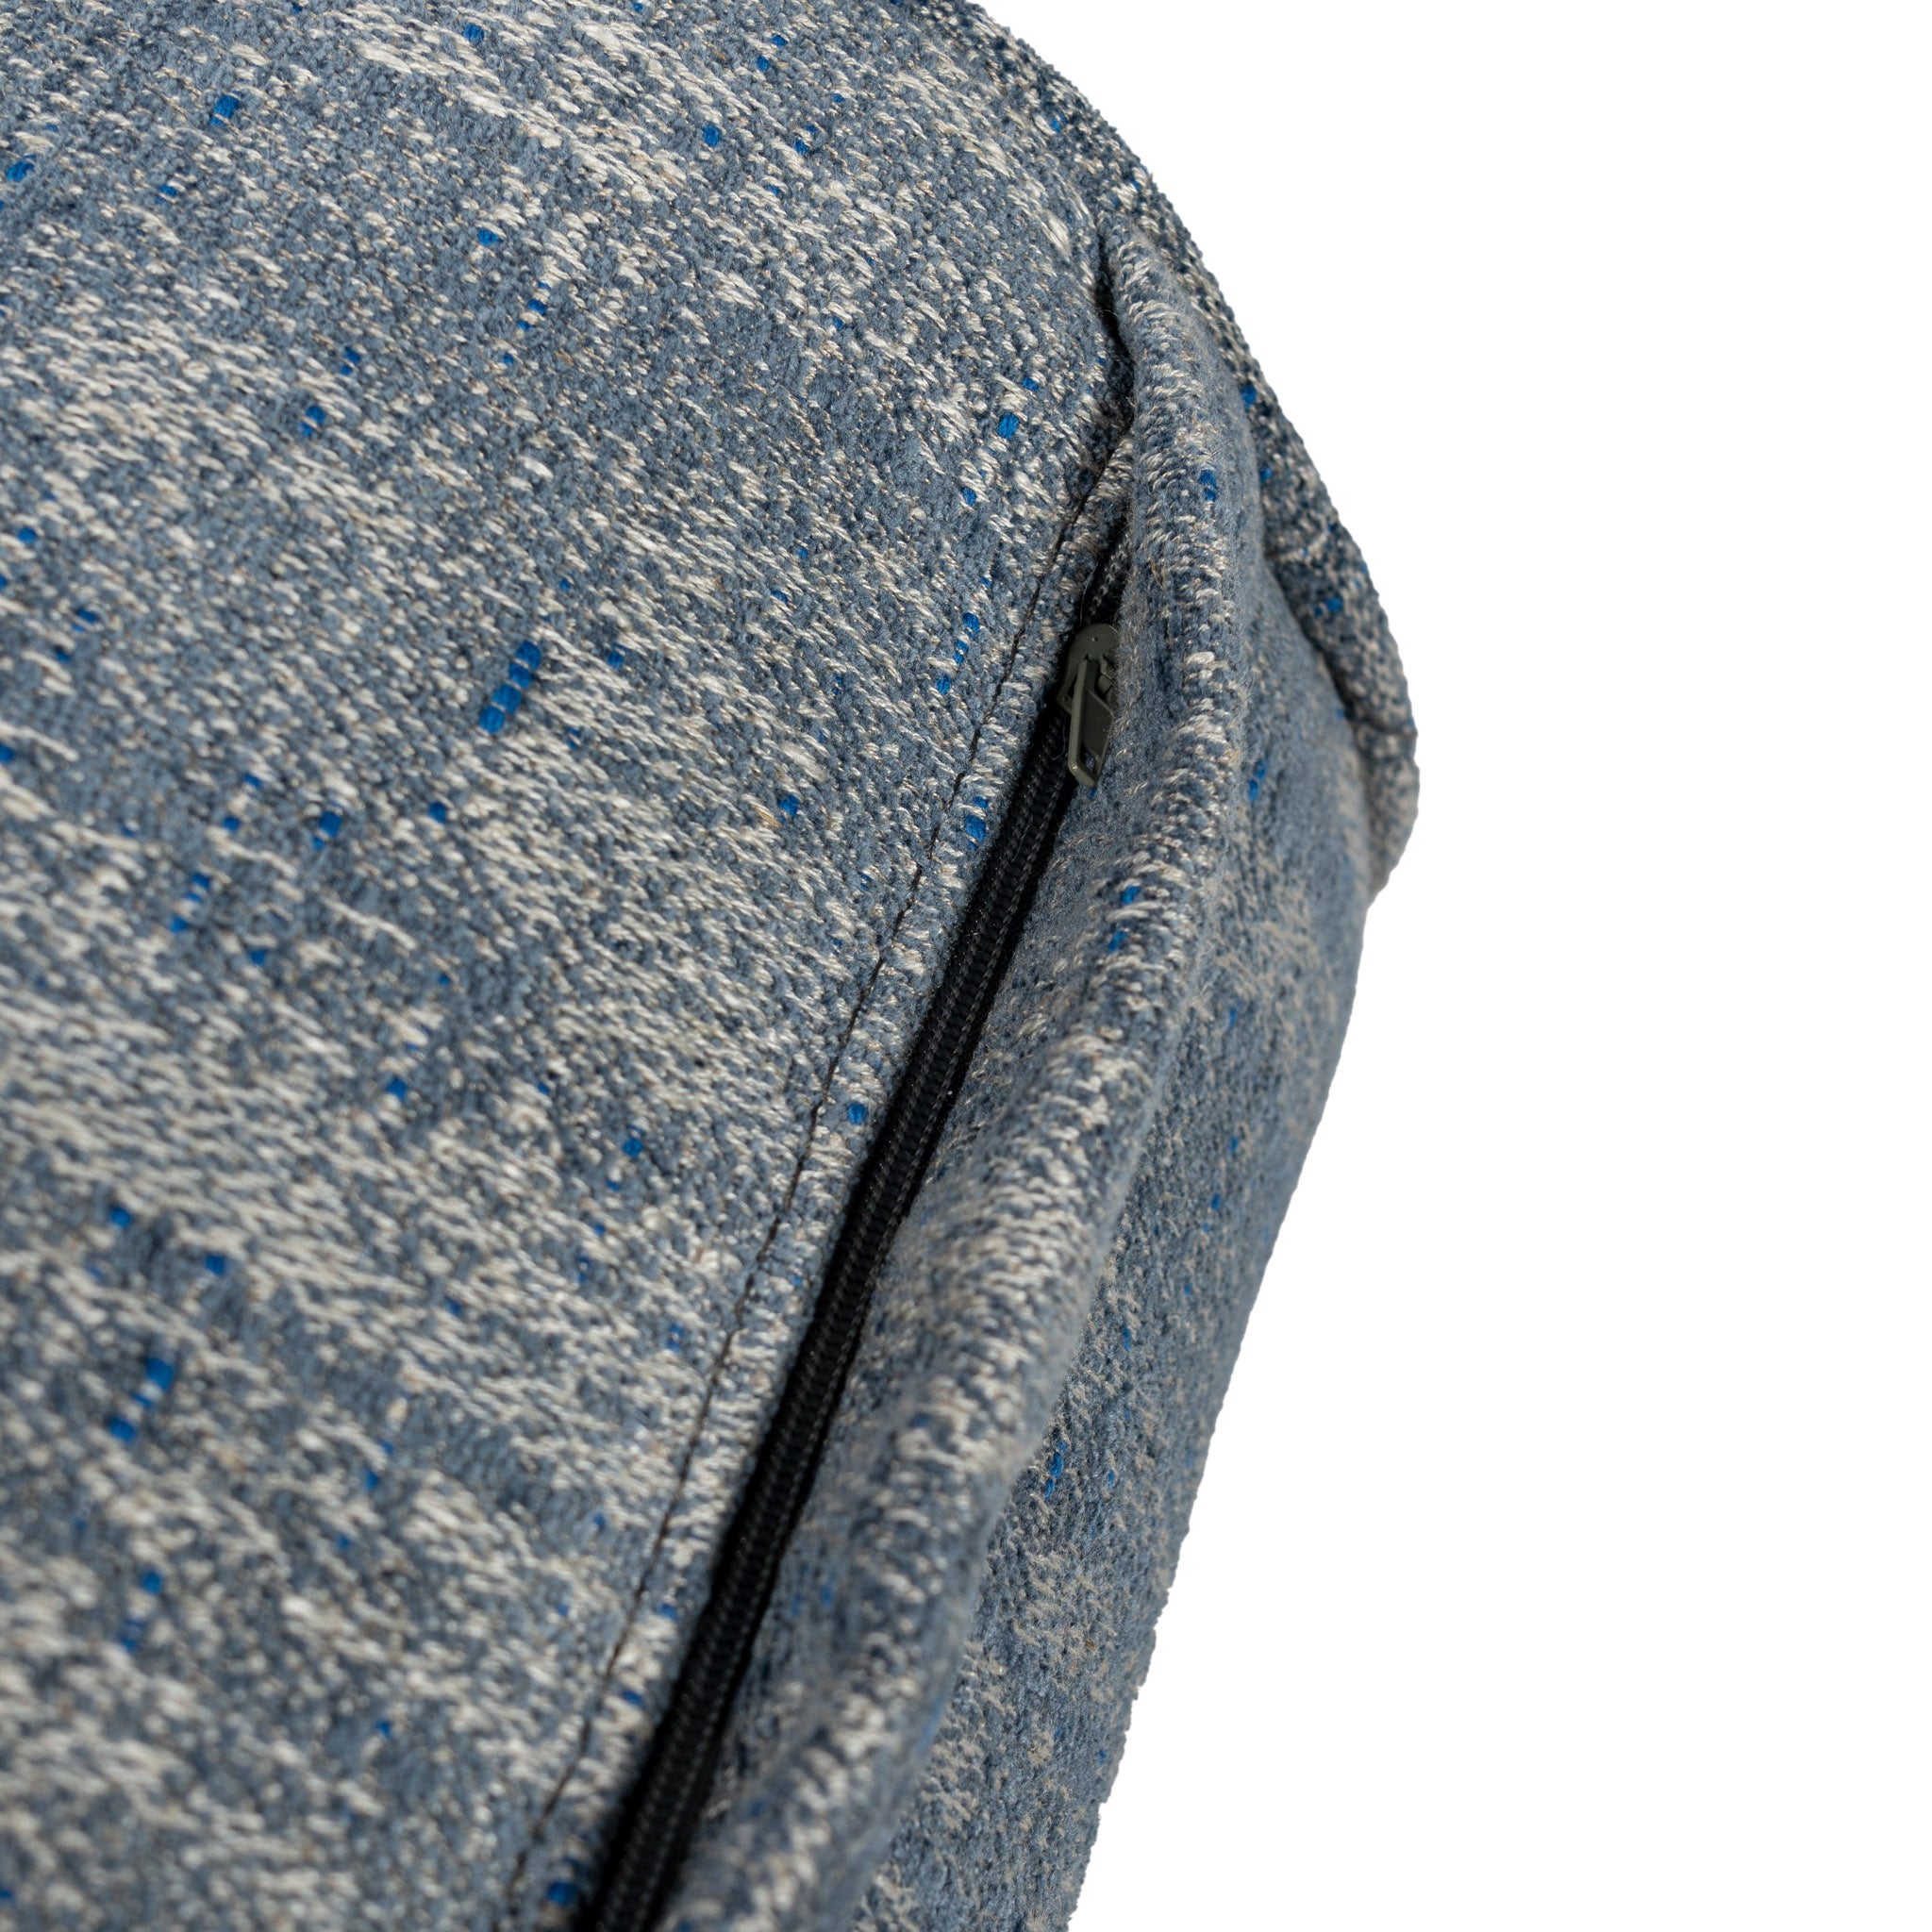 Fabric roll cushion with blue B77 inserts ART